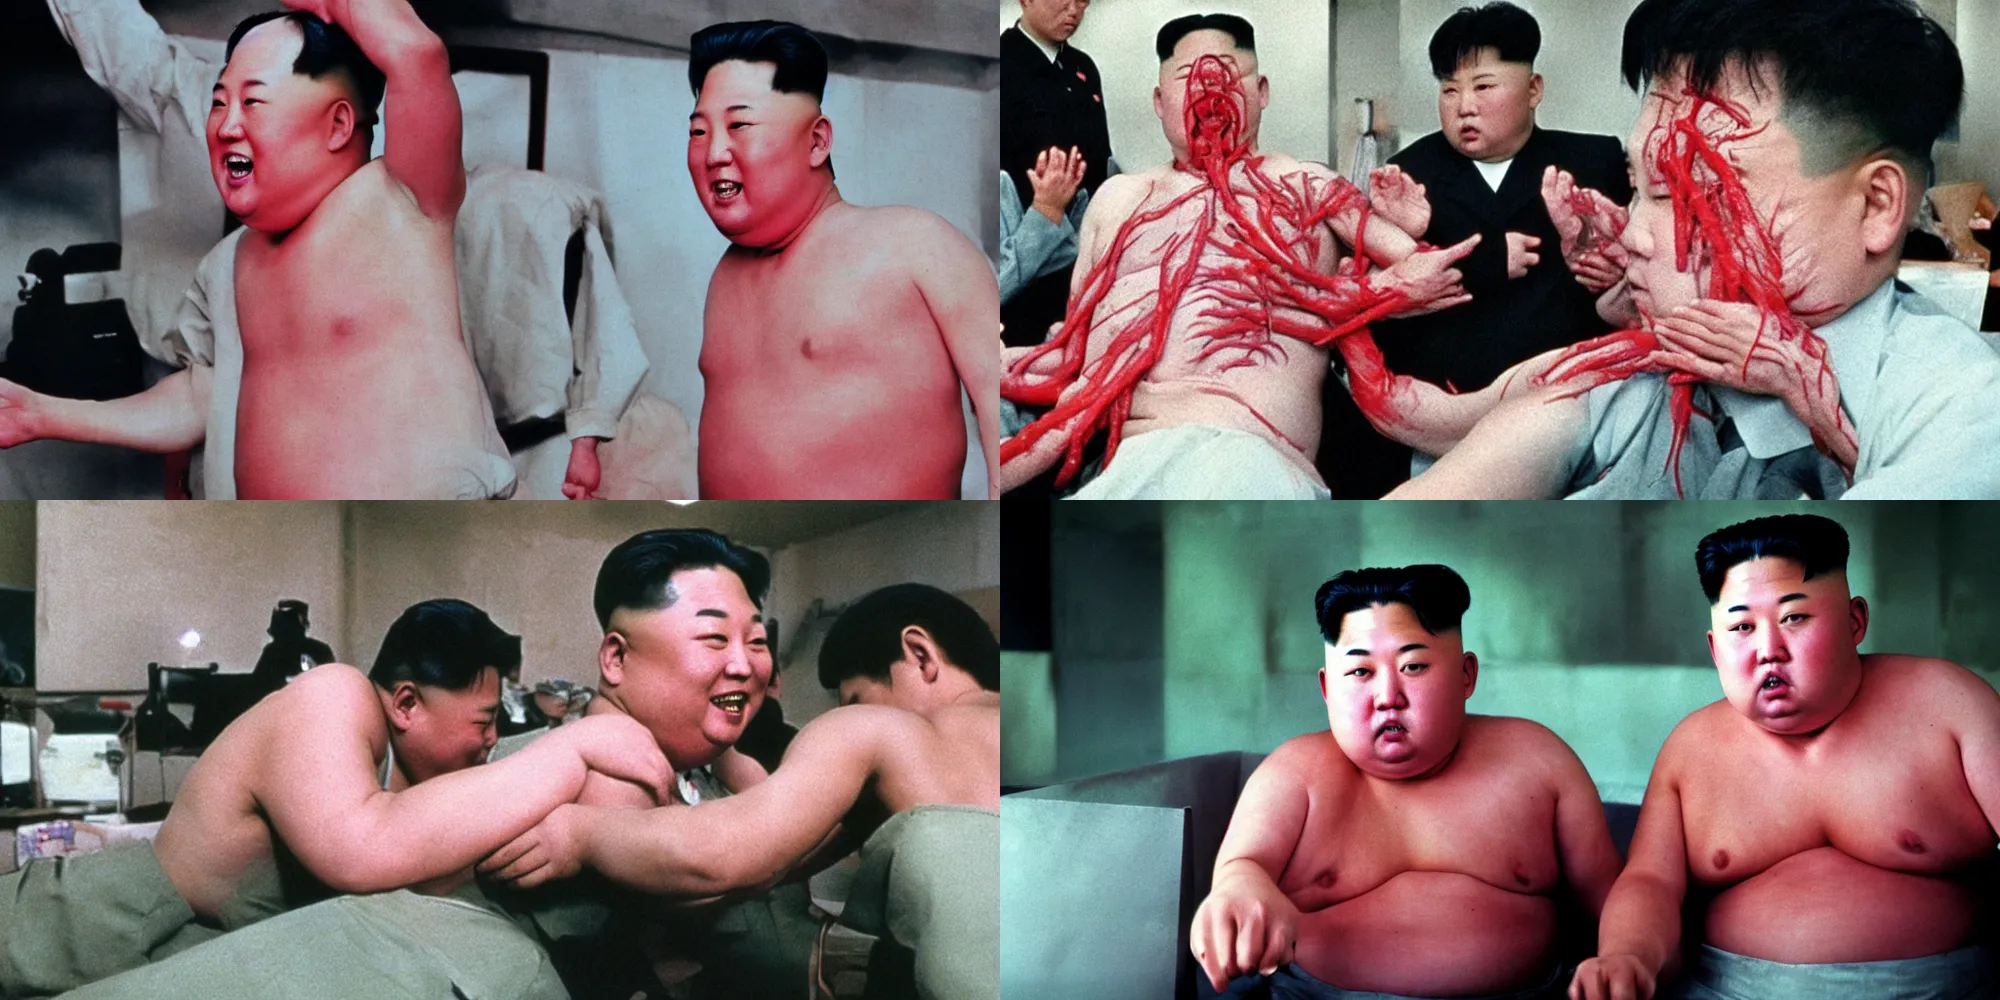 Prompt: kim jong - un body horror directed by david cronenberg, limb mutations, swollen veins, red flesh strings, cinestill 8 0 0 t, 1 9 8 0 s movie still, film grain